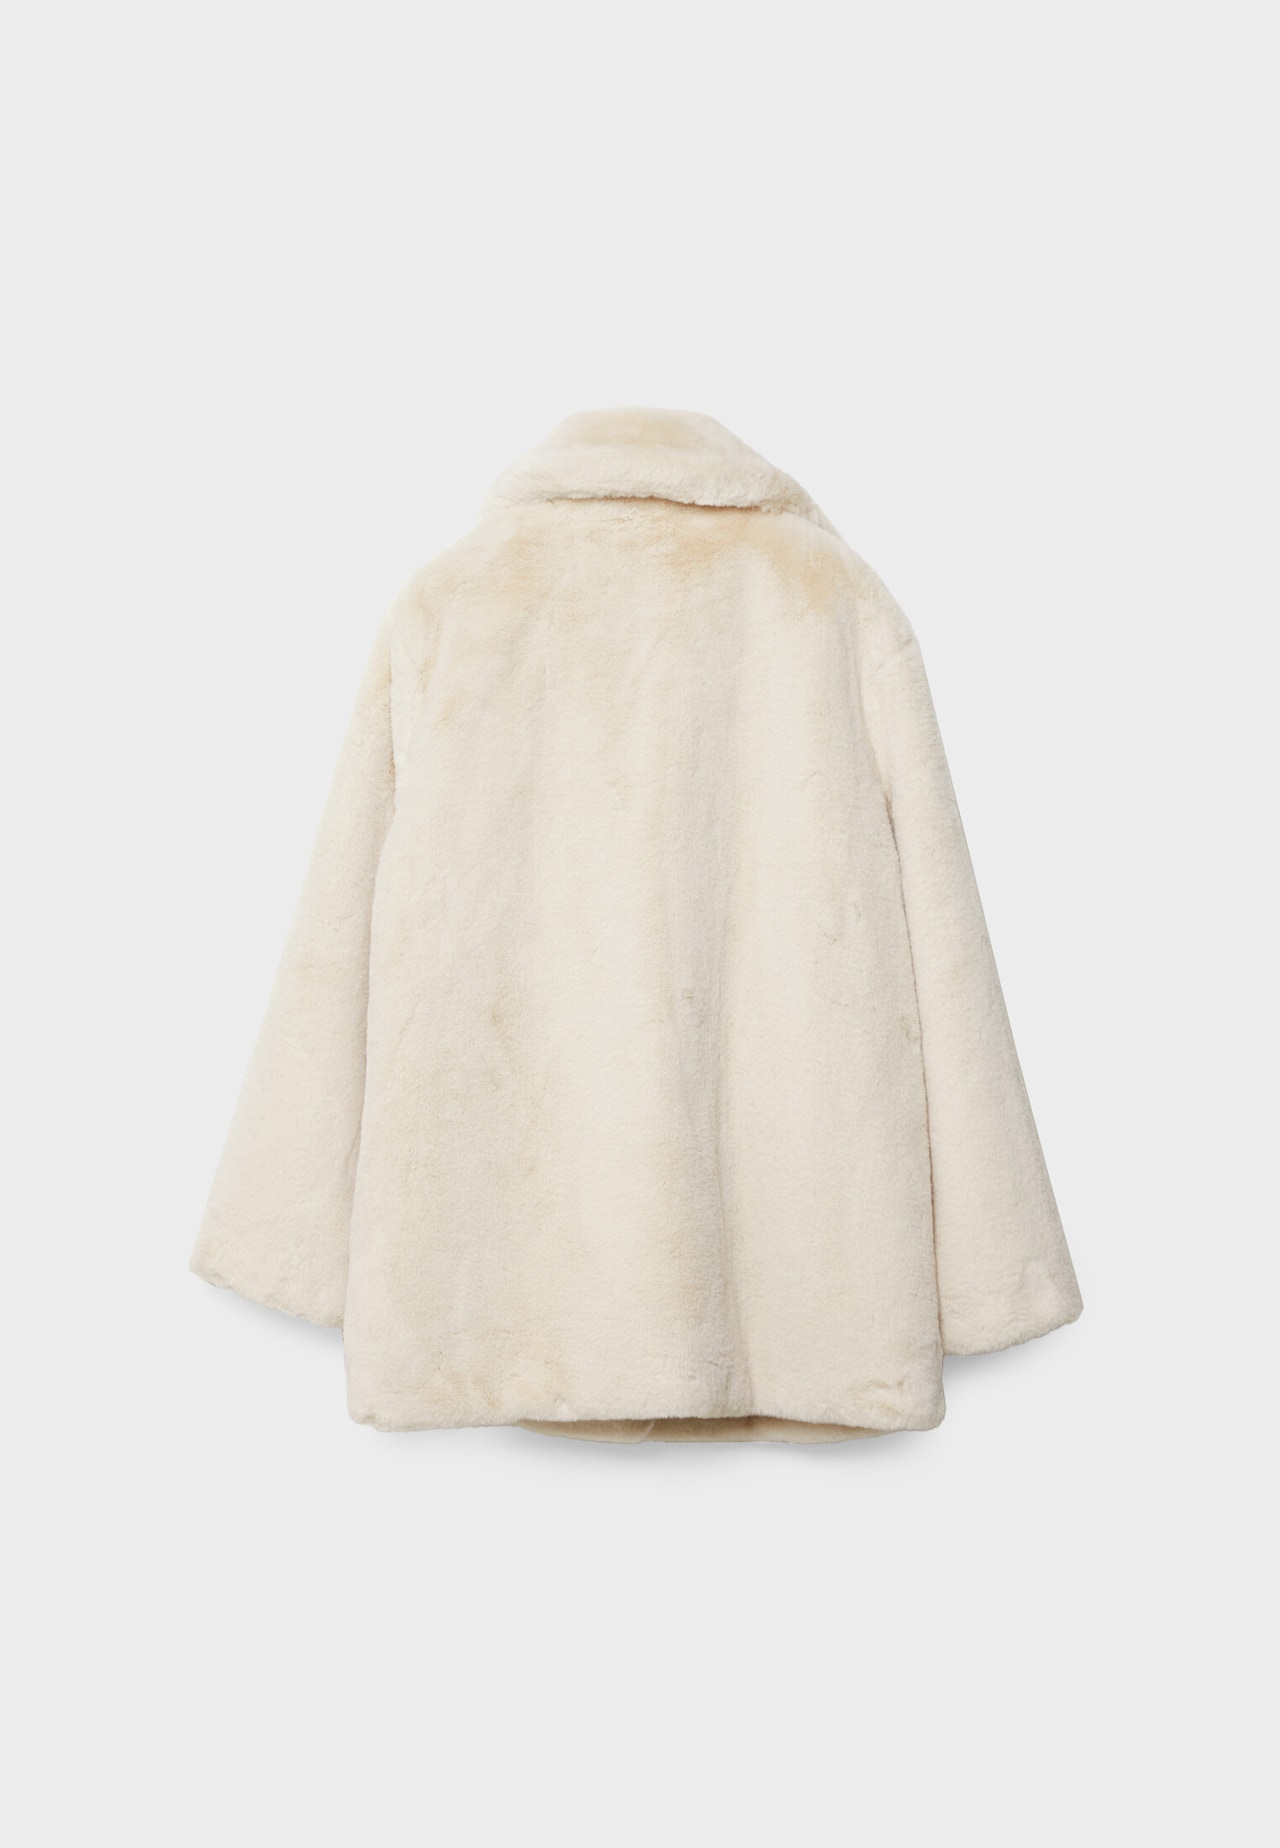 Faux fur coat - Women's fashion